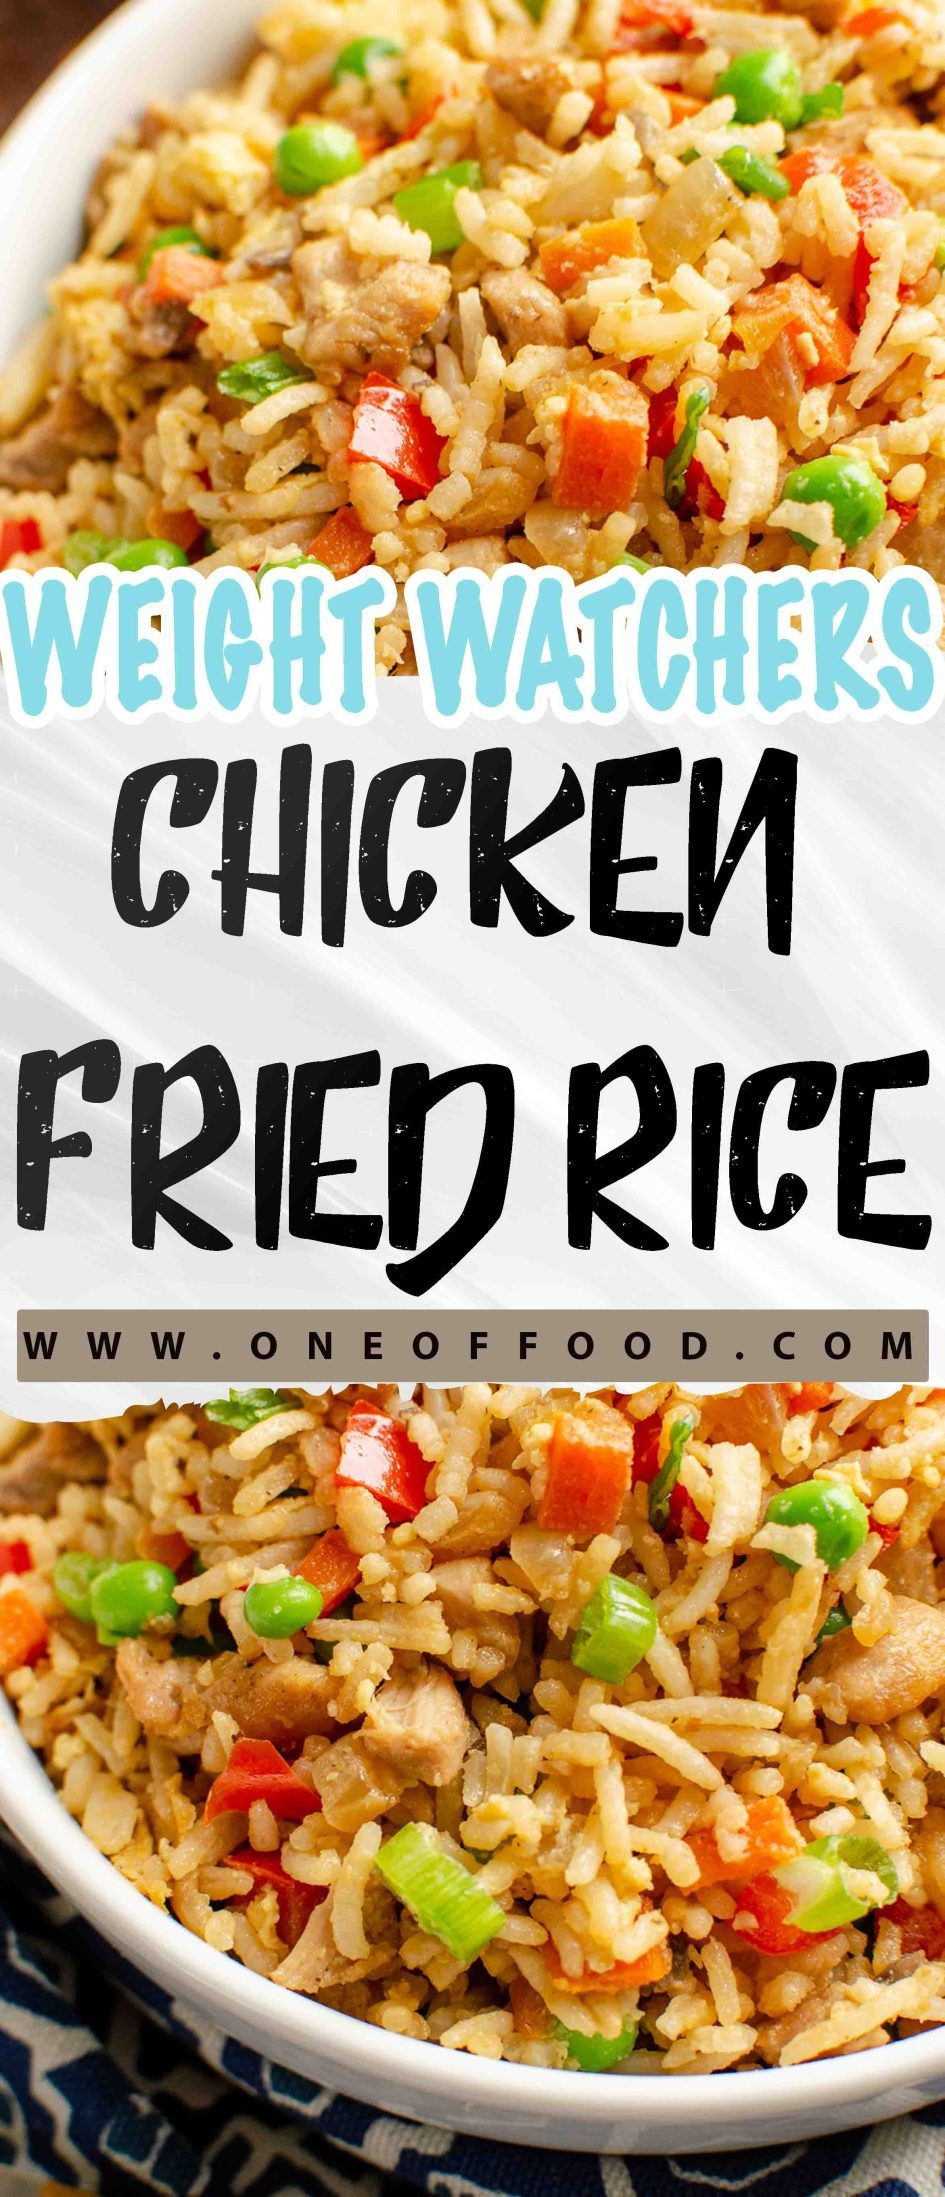 Weight Watchers Chicken Fried Rice
 Weight Watcher’s – e of food